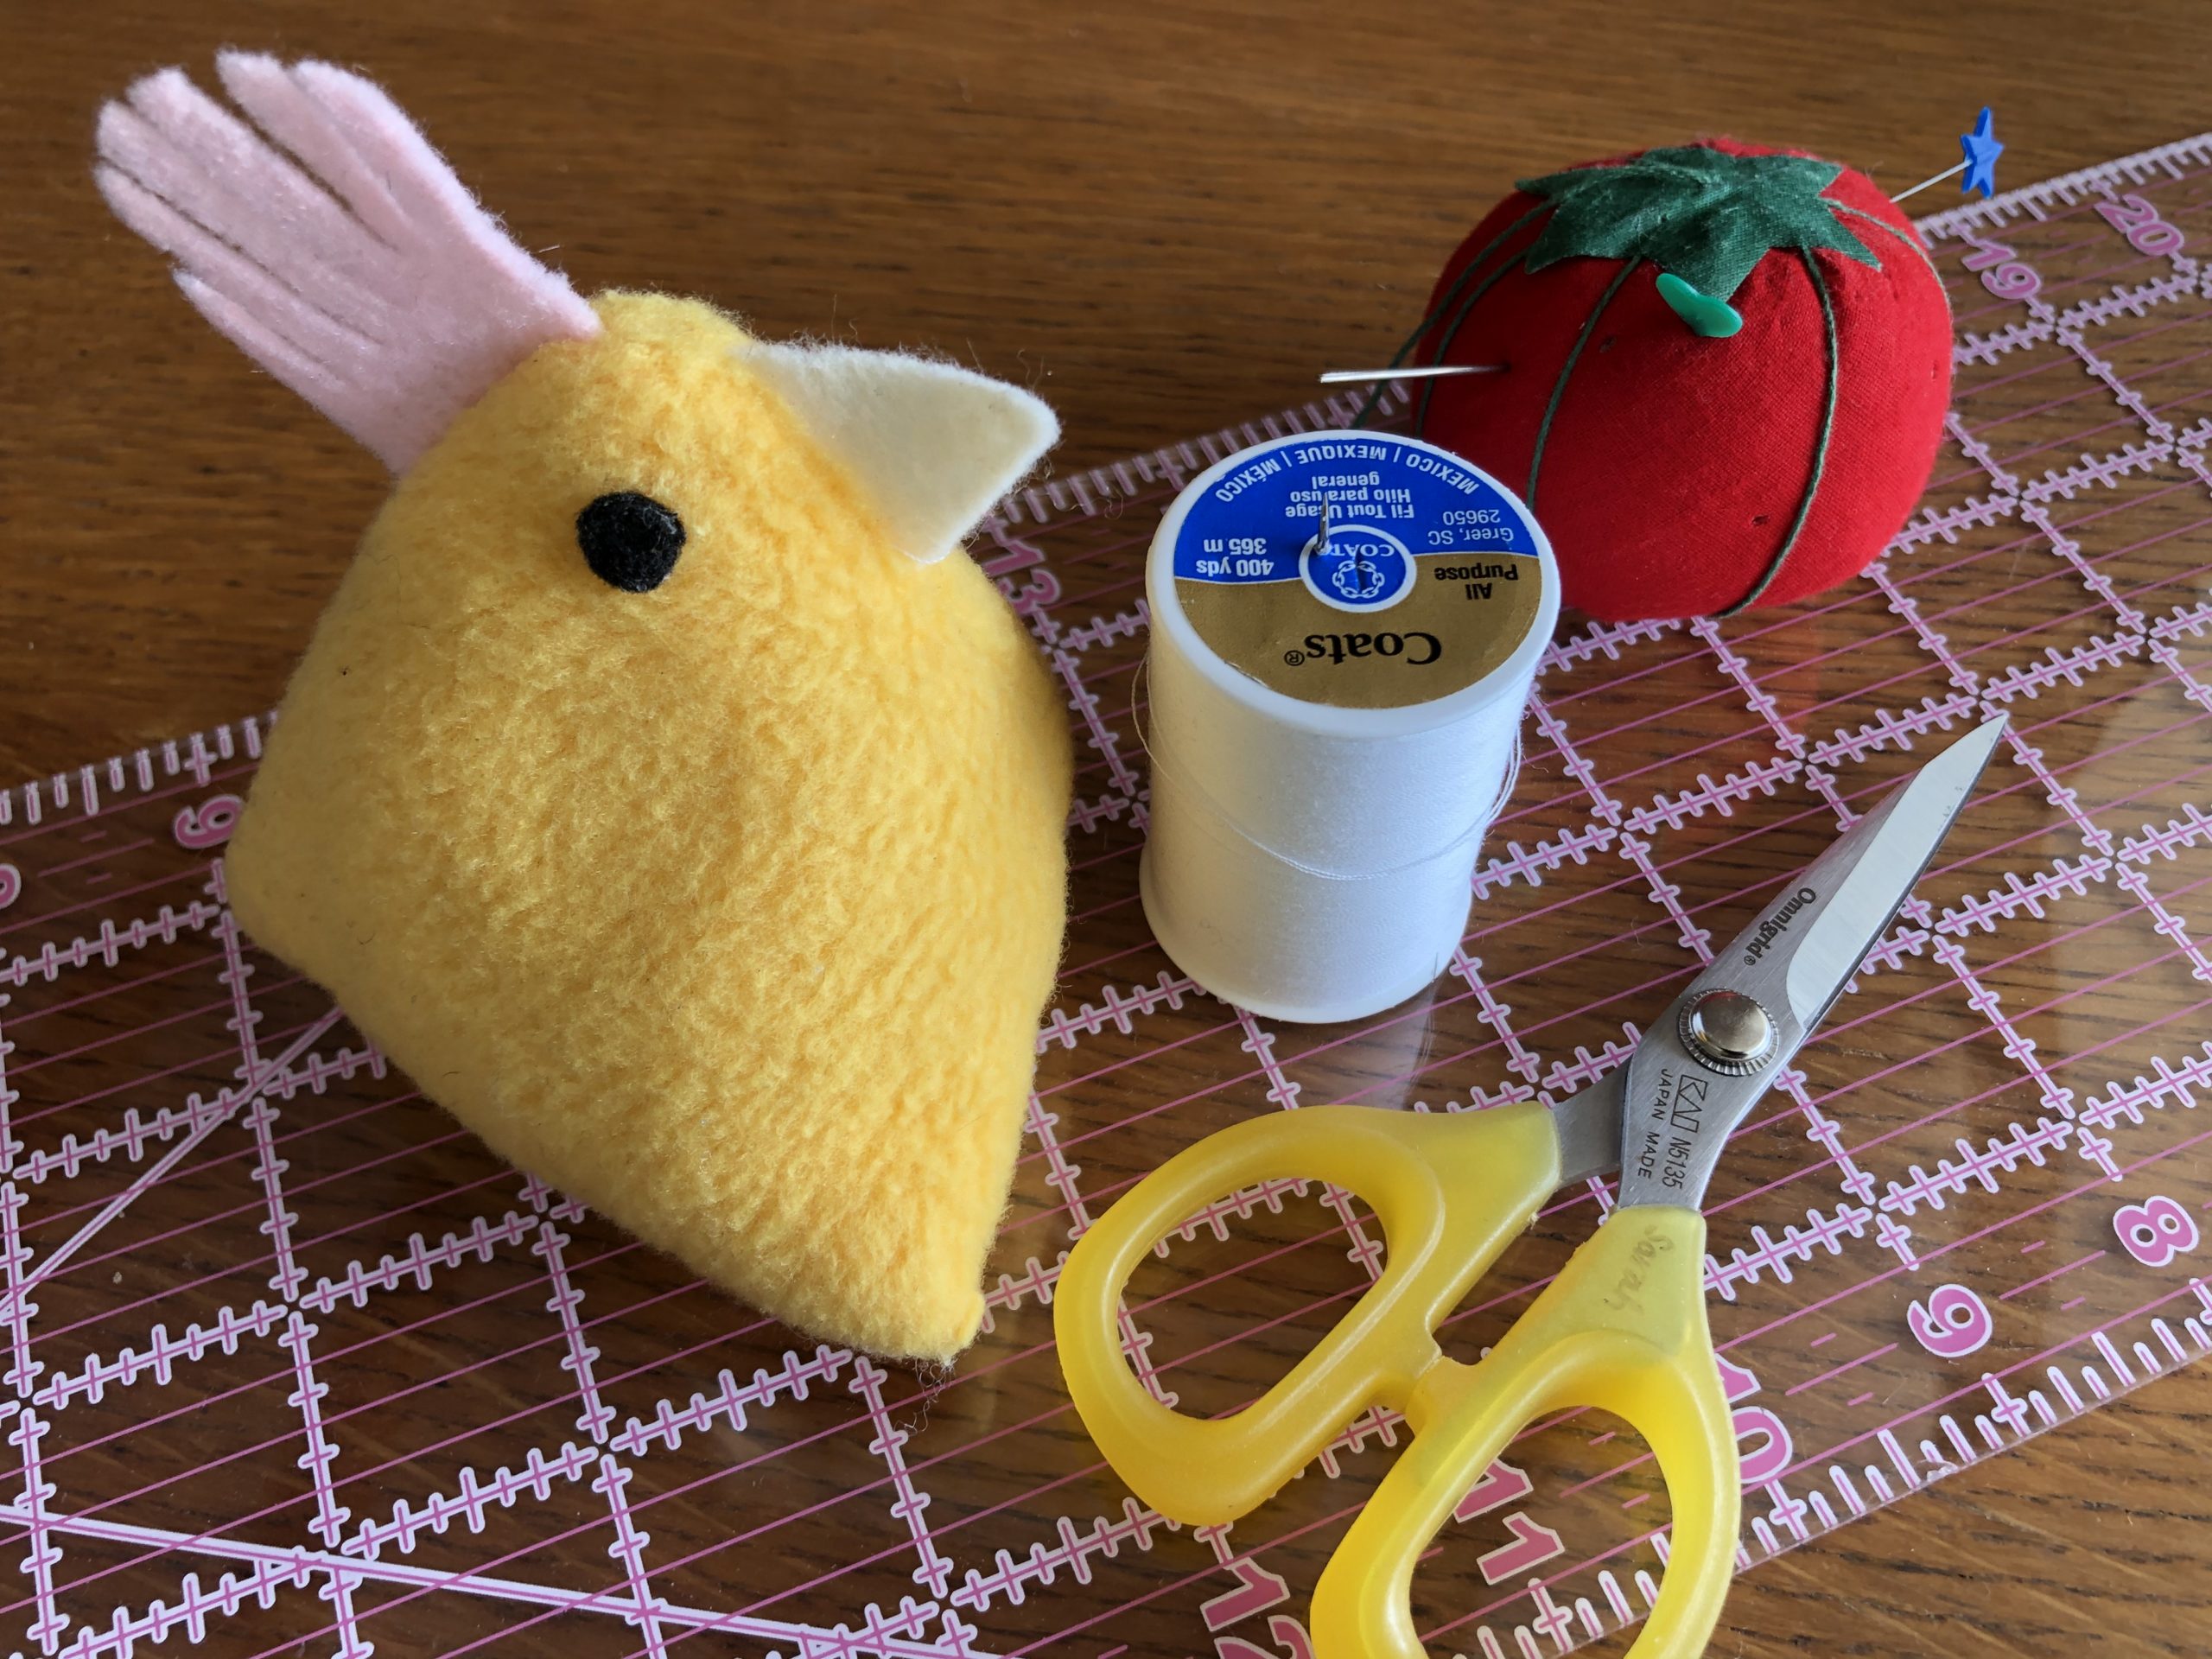 Stuffed animal, thread, scissors, and pincushion on a cutting mat.